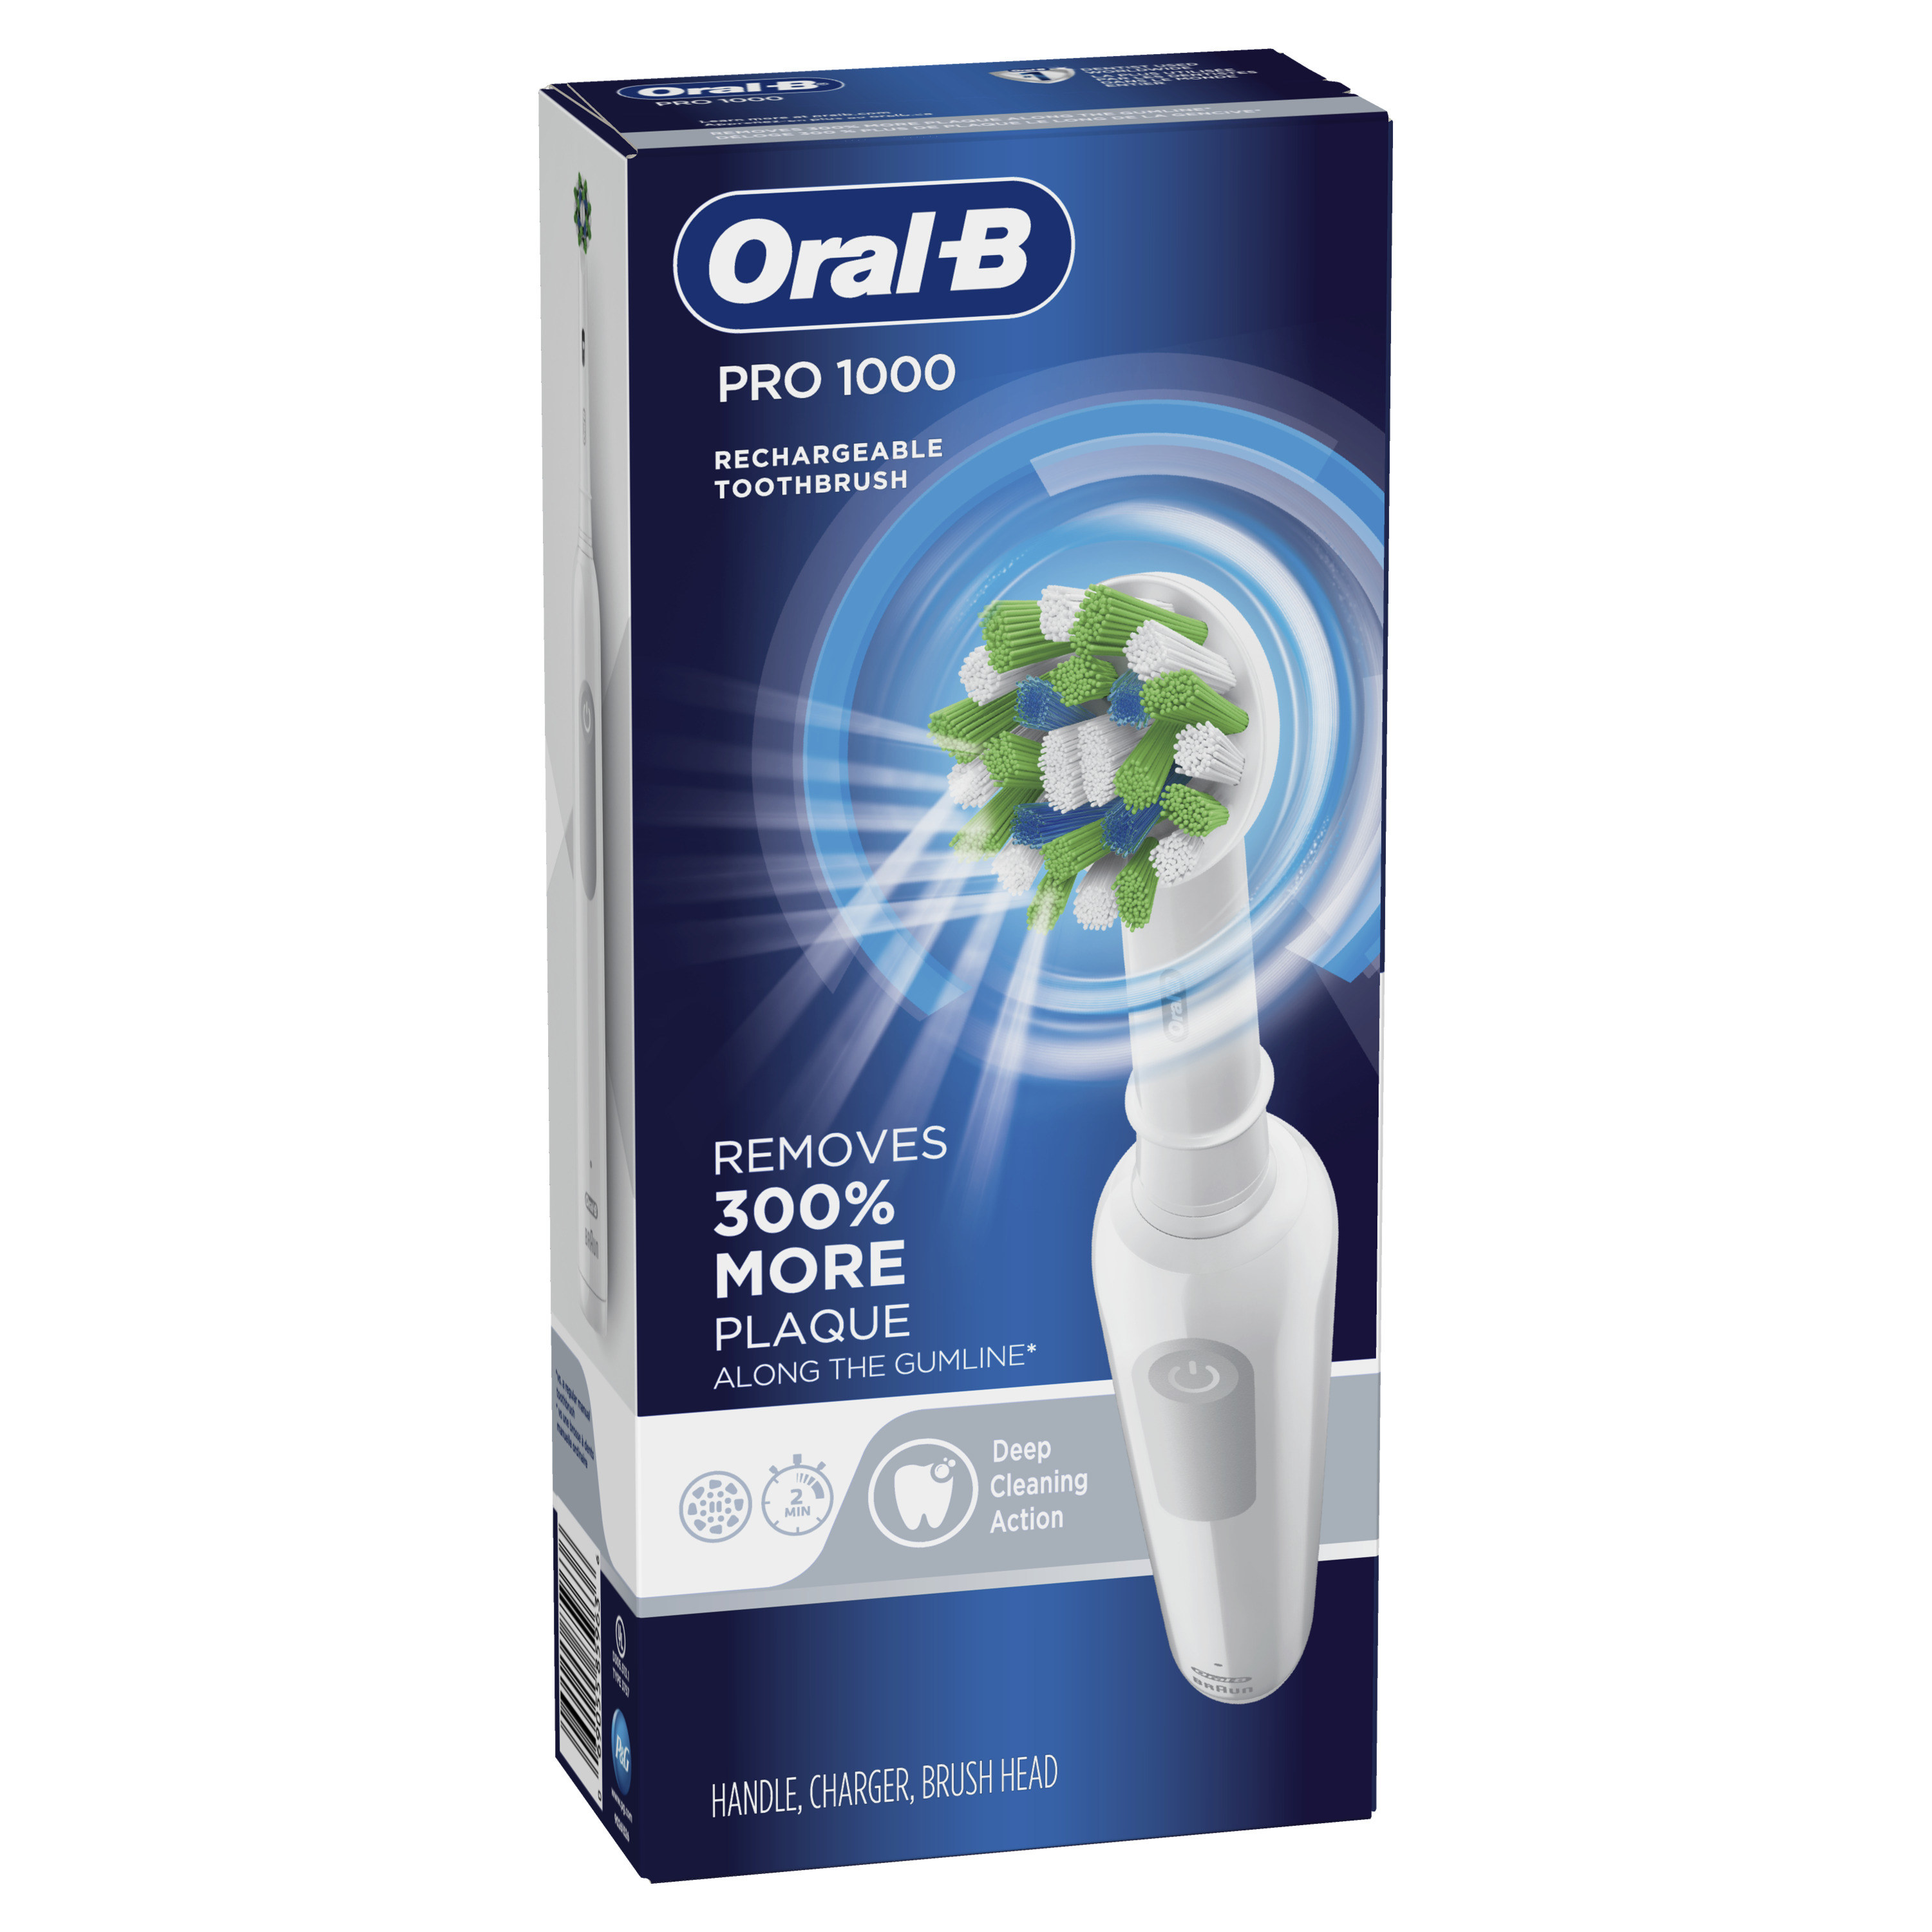 Oral-B toothbrushes